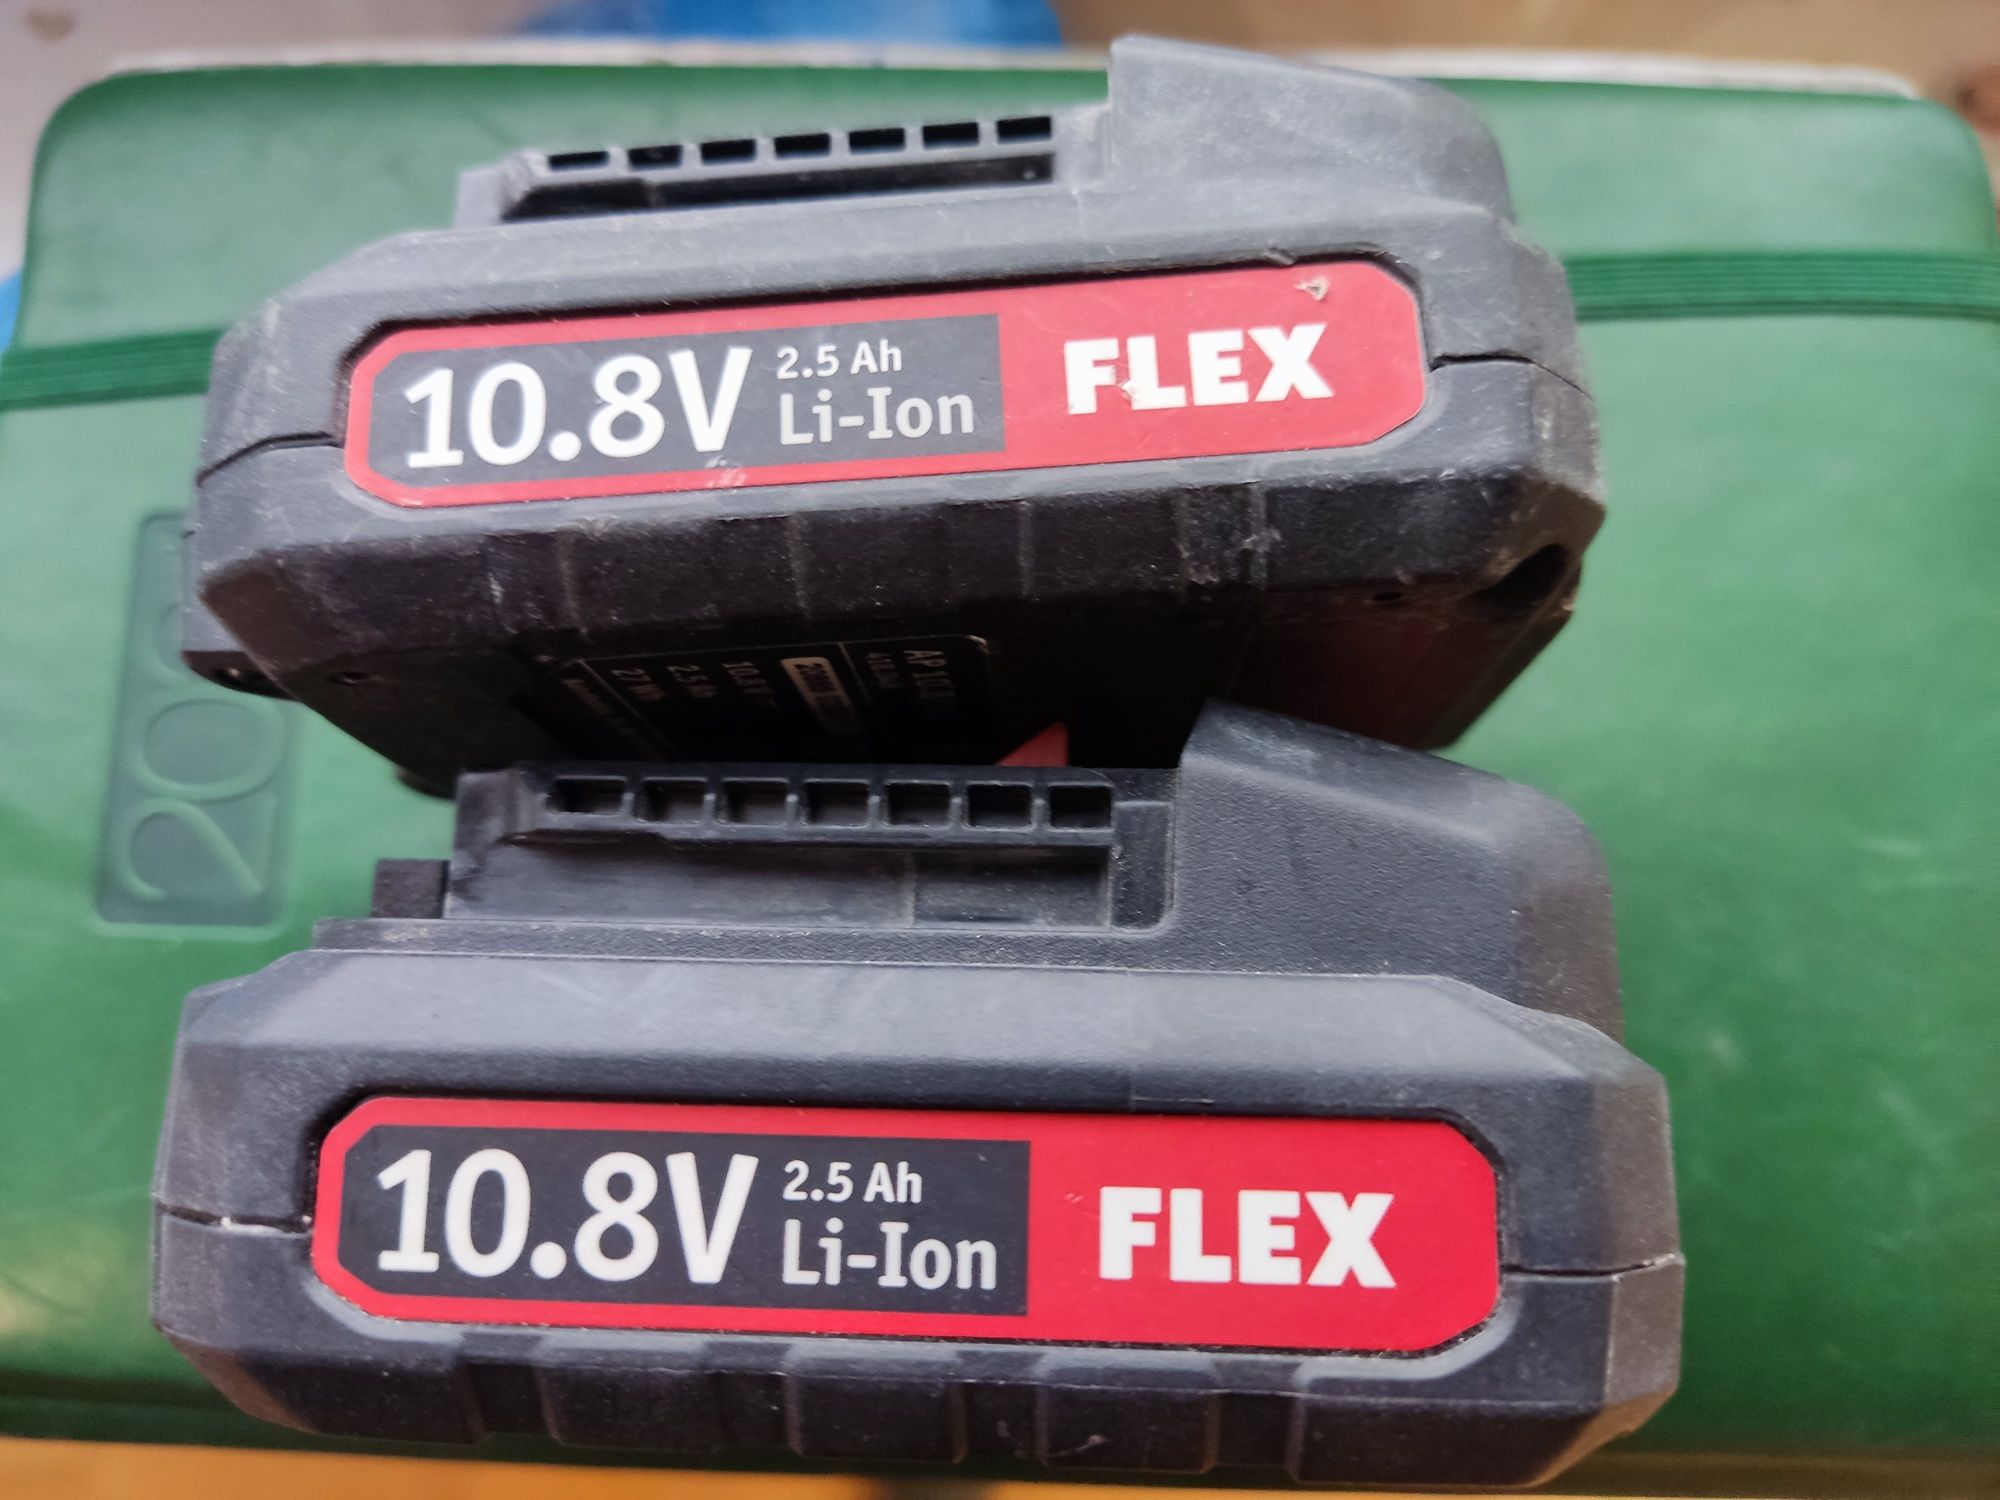 Sprzedam akumulator flex 2.5 ah